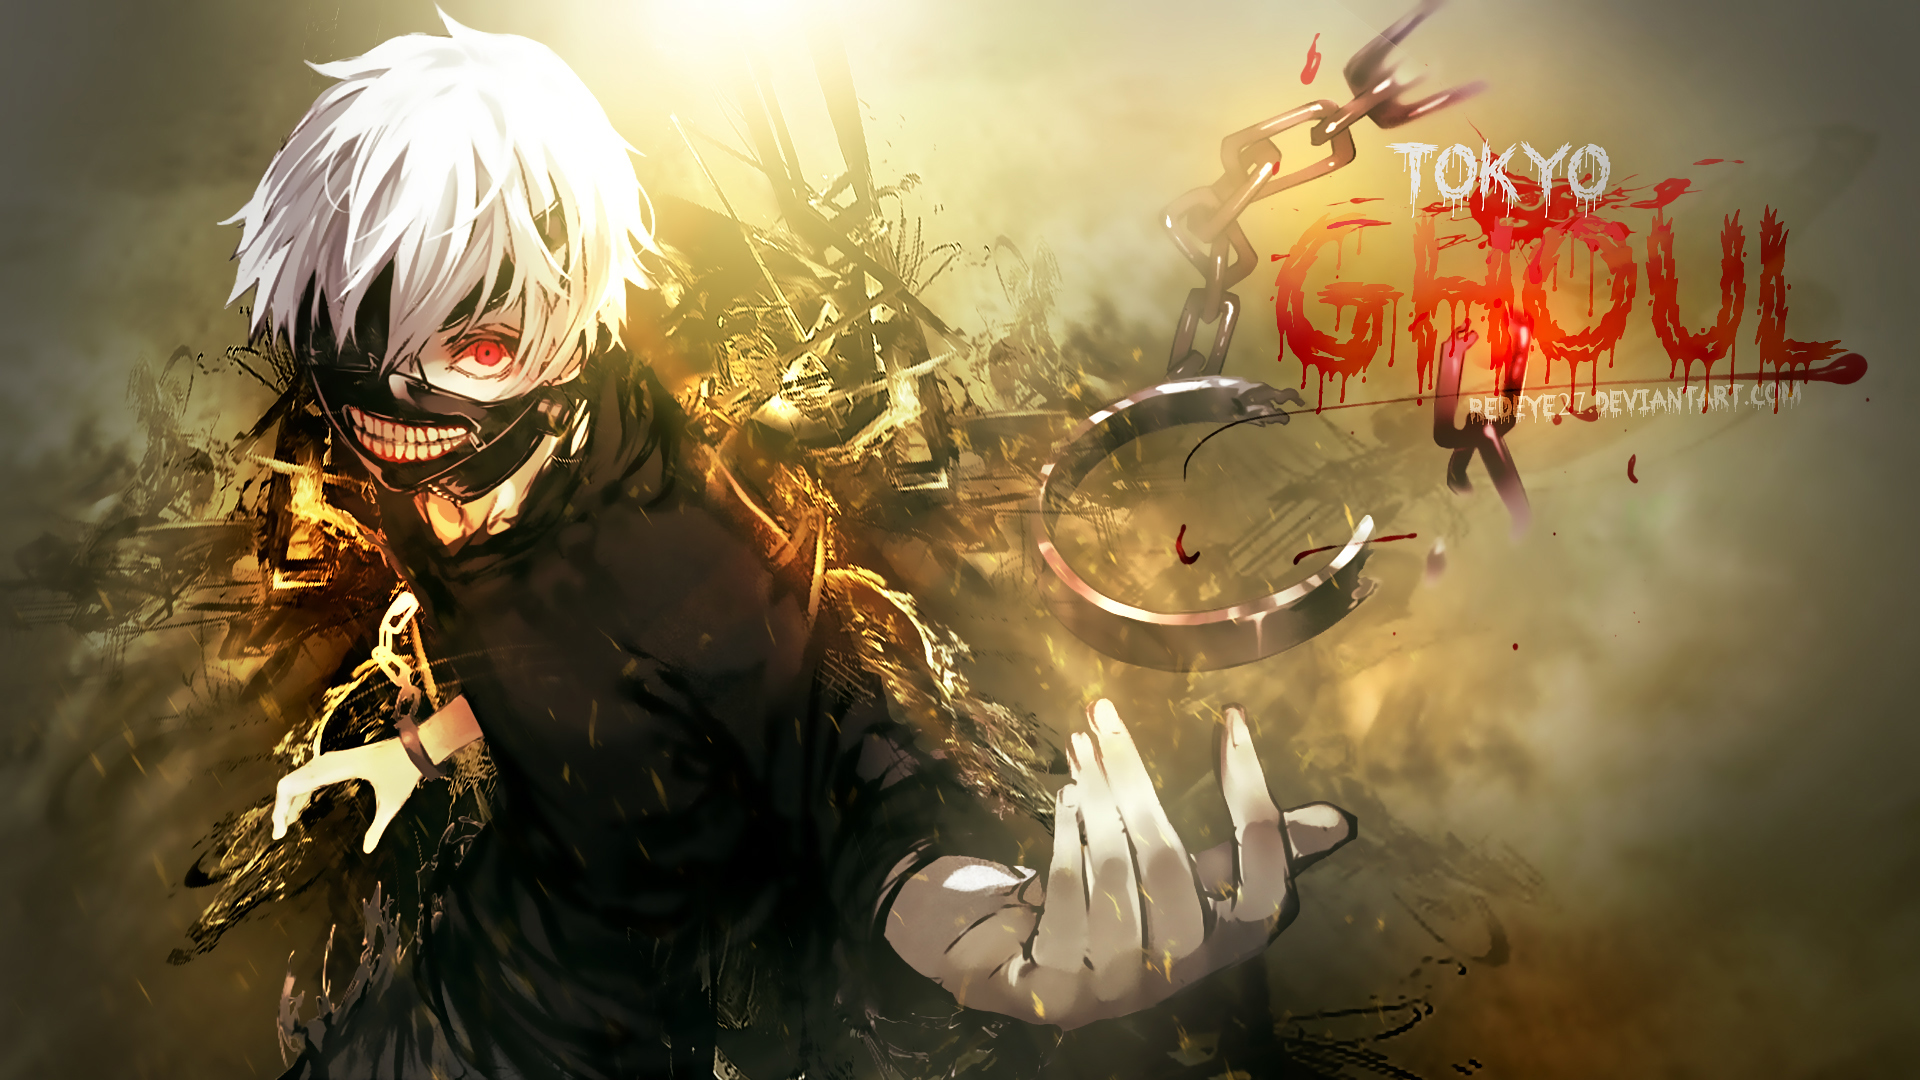 tokyo ghoul wallpaper,cg artwork,pc game,anime,graphic design,games